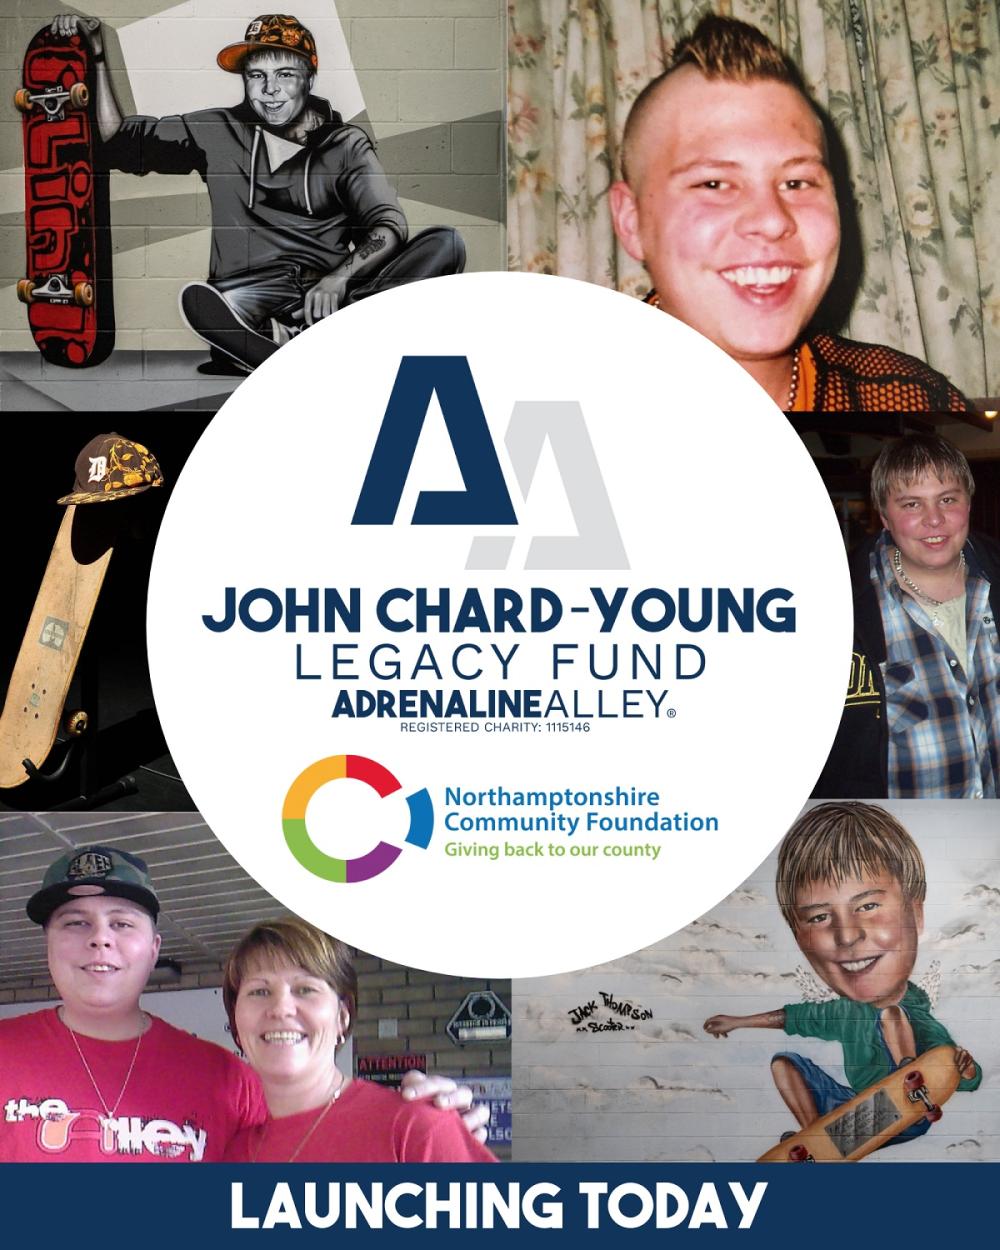 JOHN CHARD-YOUNG LEGACY FUND